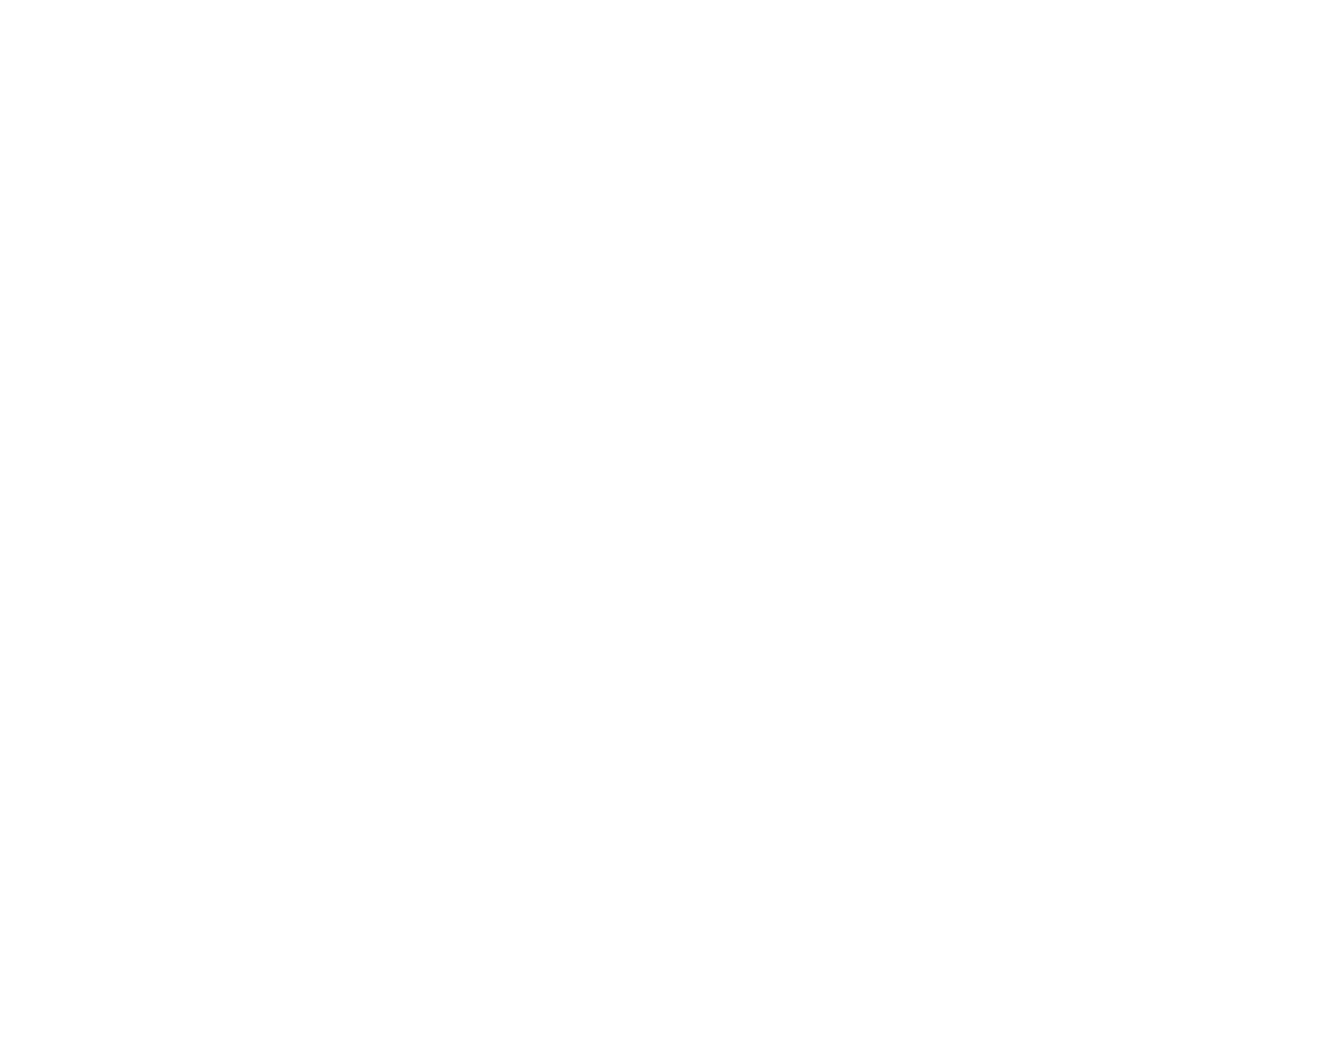 Emily By Emusic Lab Logo